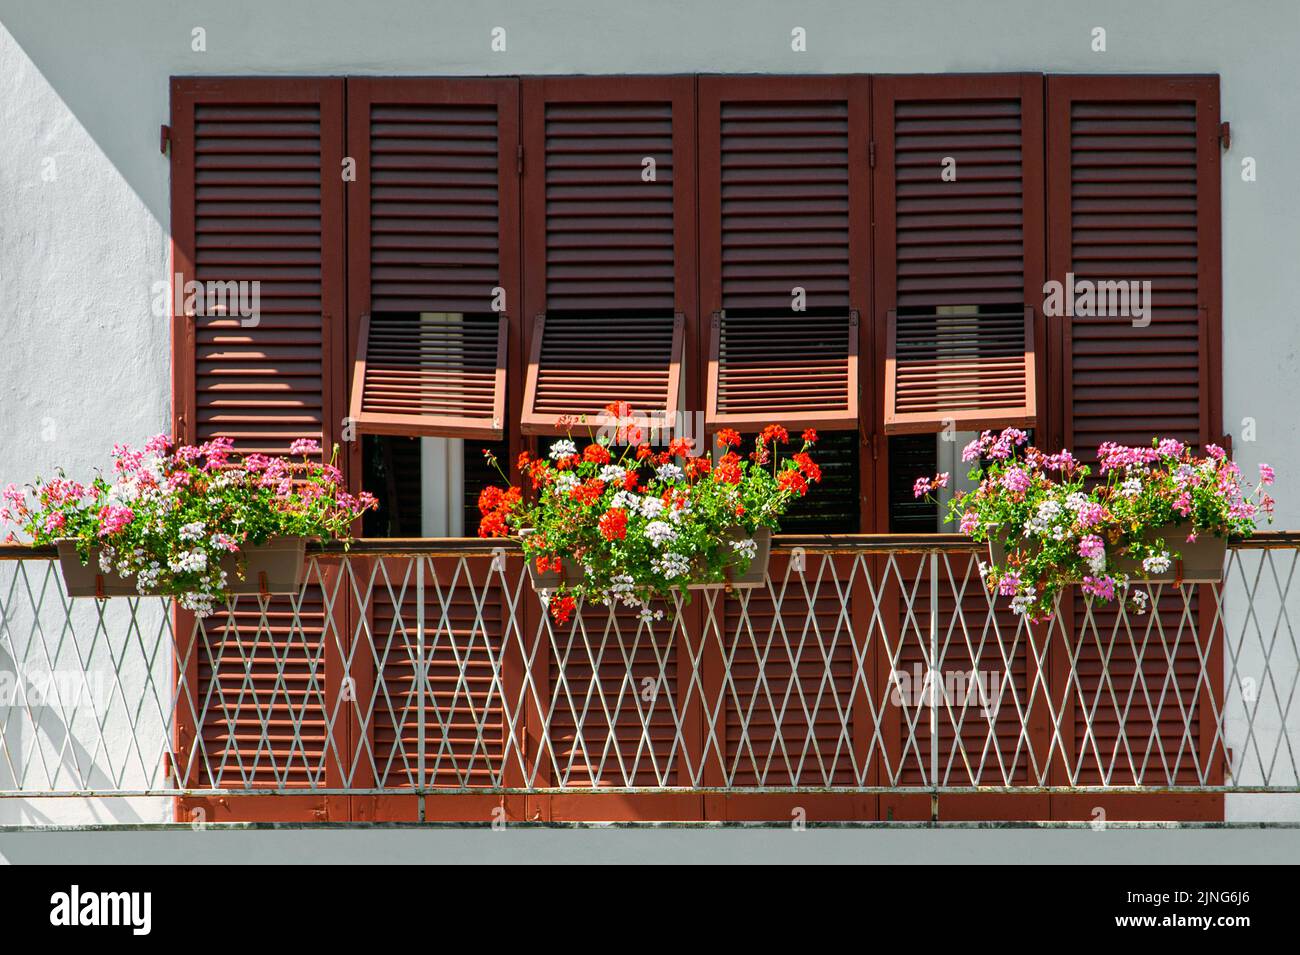 Flowers on the windowsill, Geranium. Stock Photo